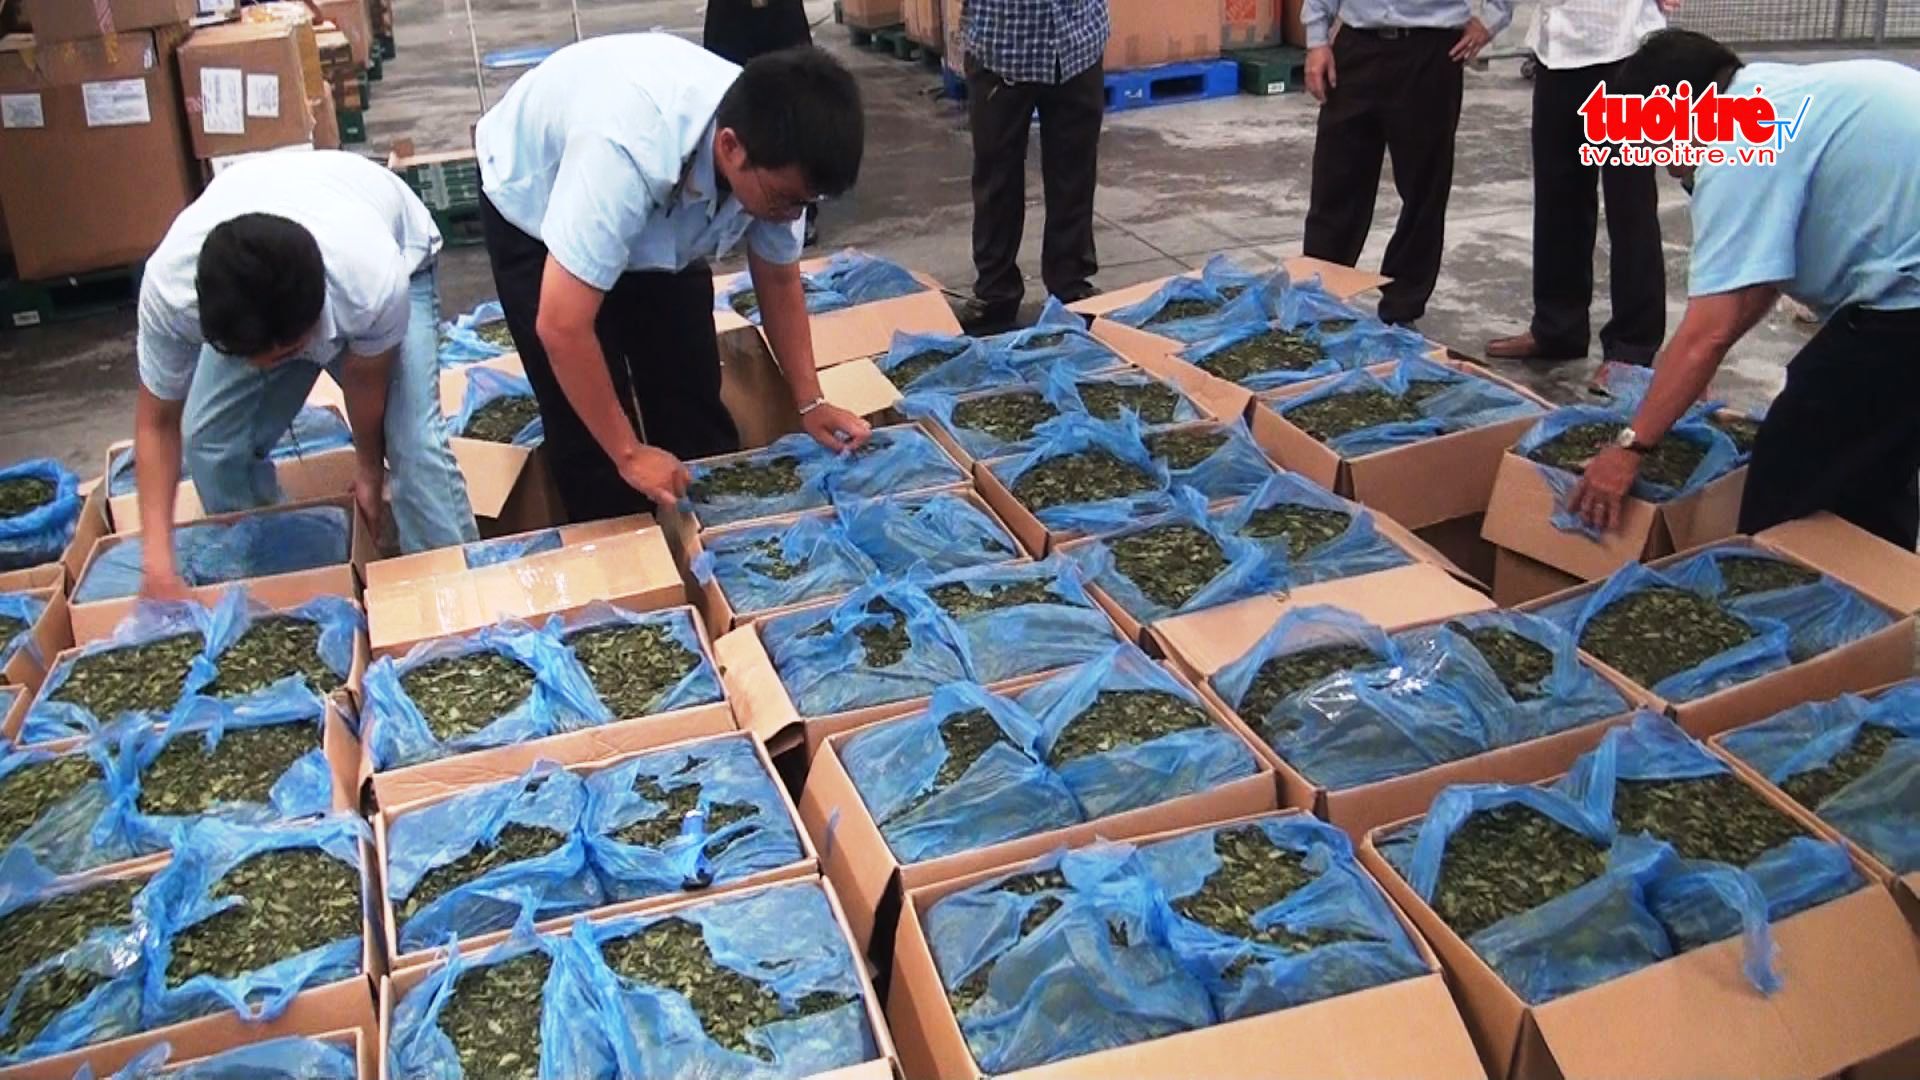 Khat smuggling – an alarming problem in Vietnam